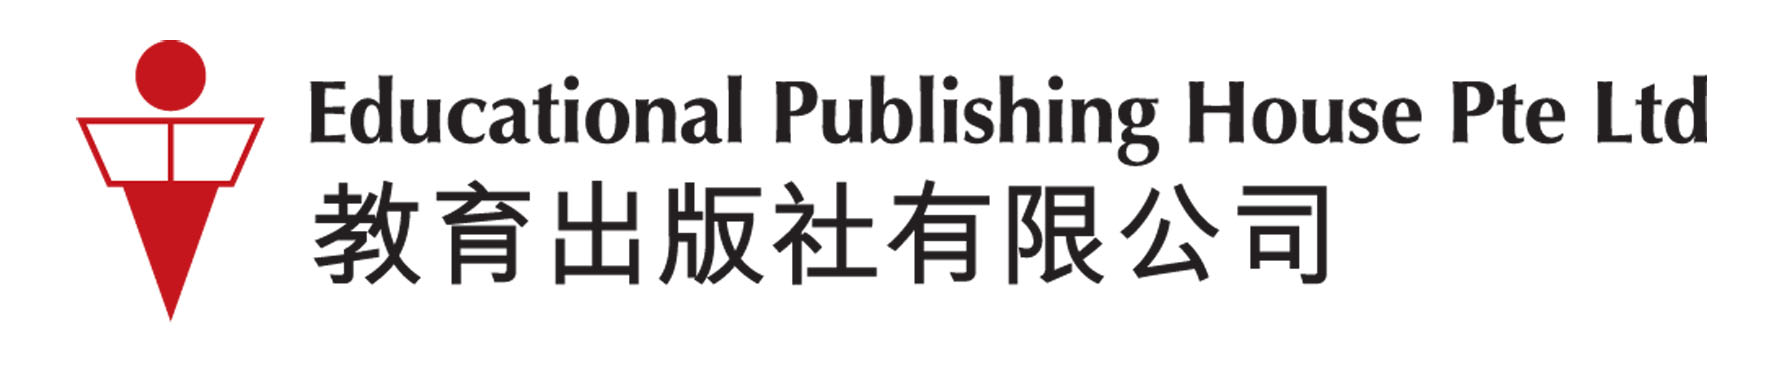 Educational Publishing House Pte Ltd company logo